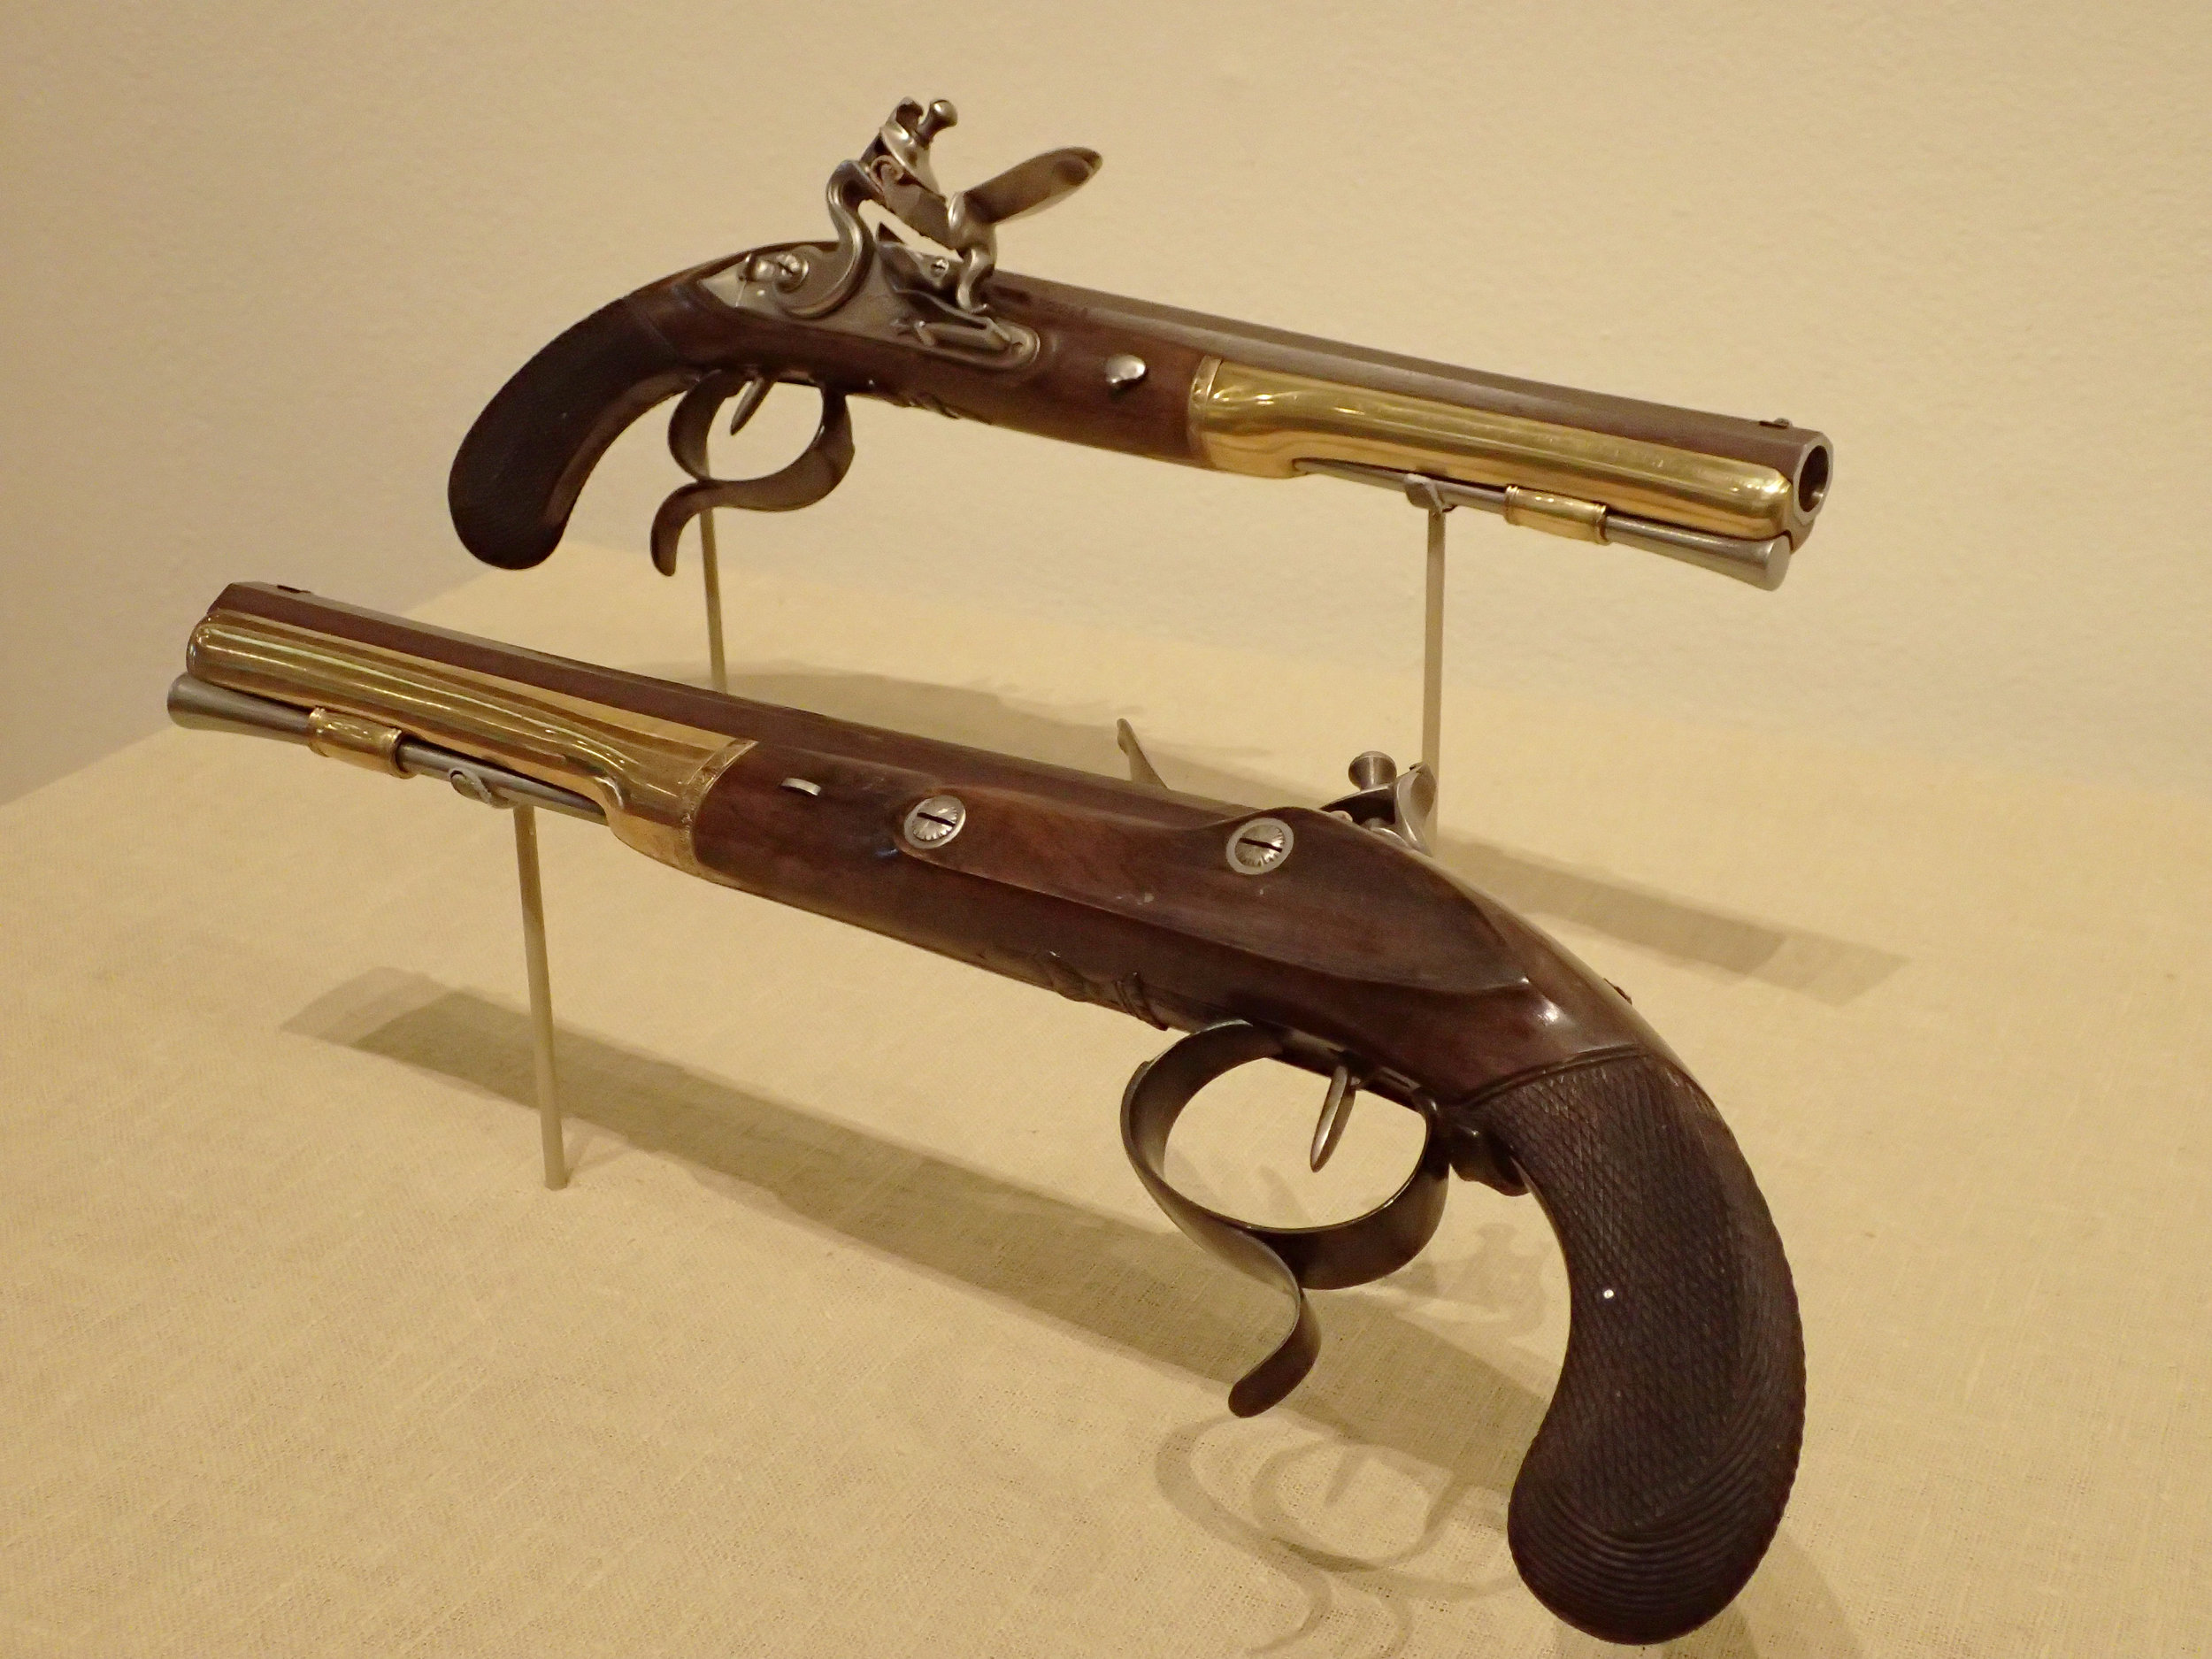   1976 replica set of Hamilton-Burr Dueling Pistols  